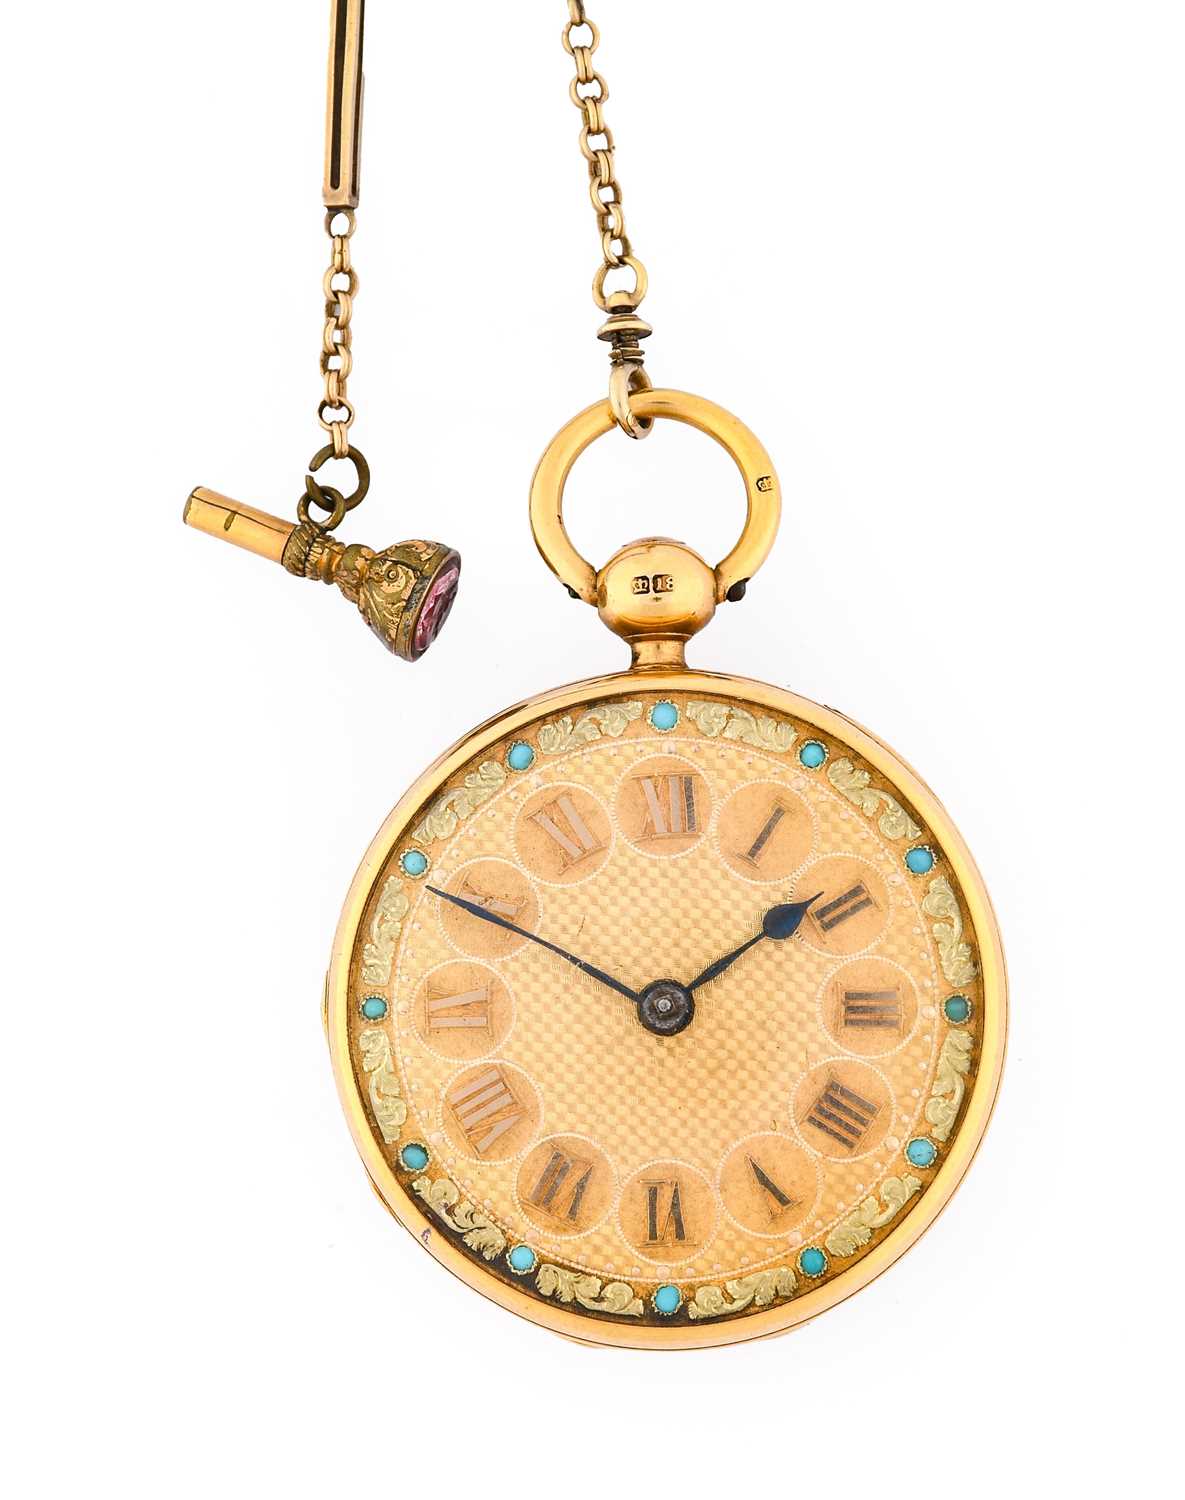 Manning: An 18 Carat Gold Open Faced Lever Pocket Watch, signed Wm Manning, Worcester, 1823,